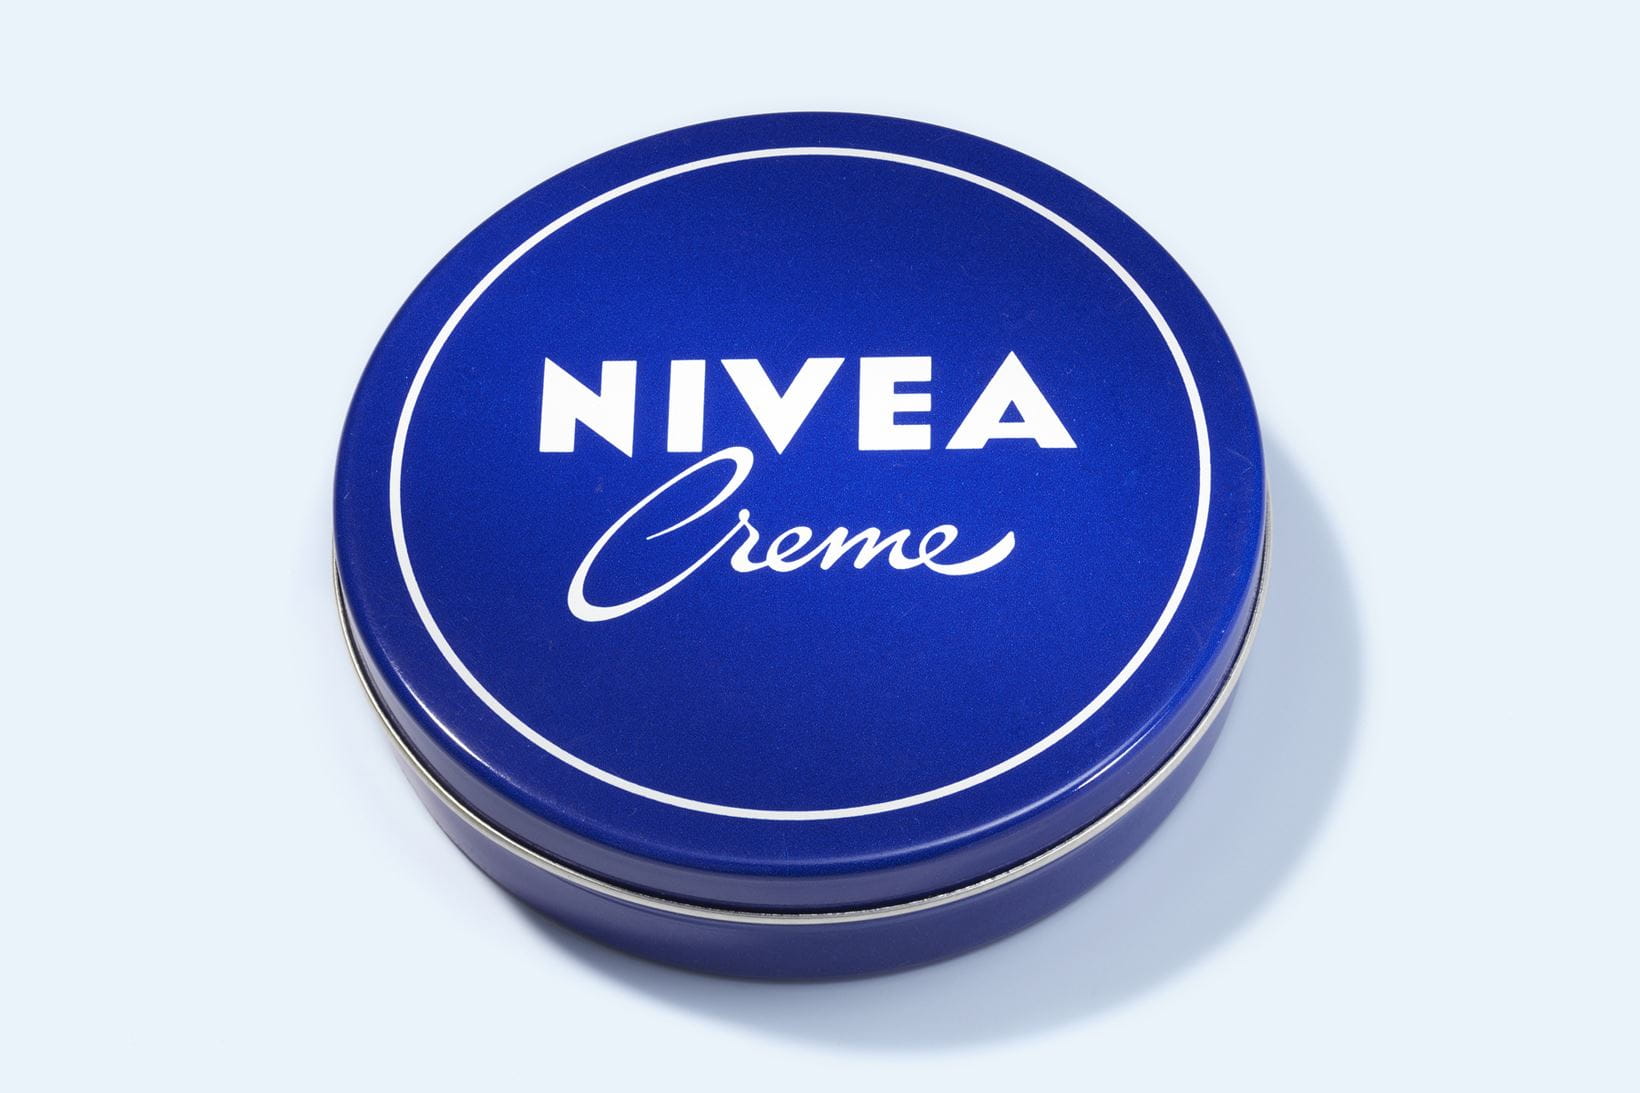 NIVEA Creme 1959